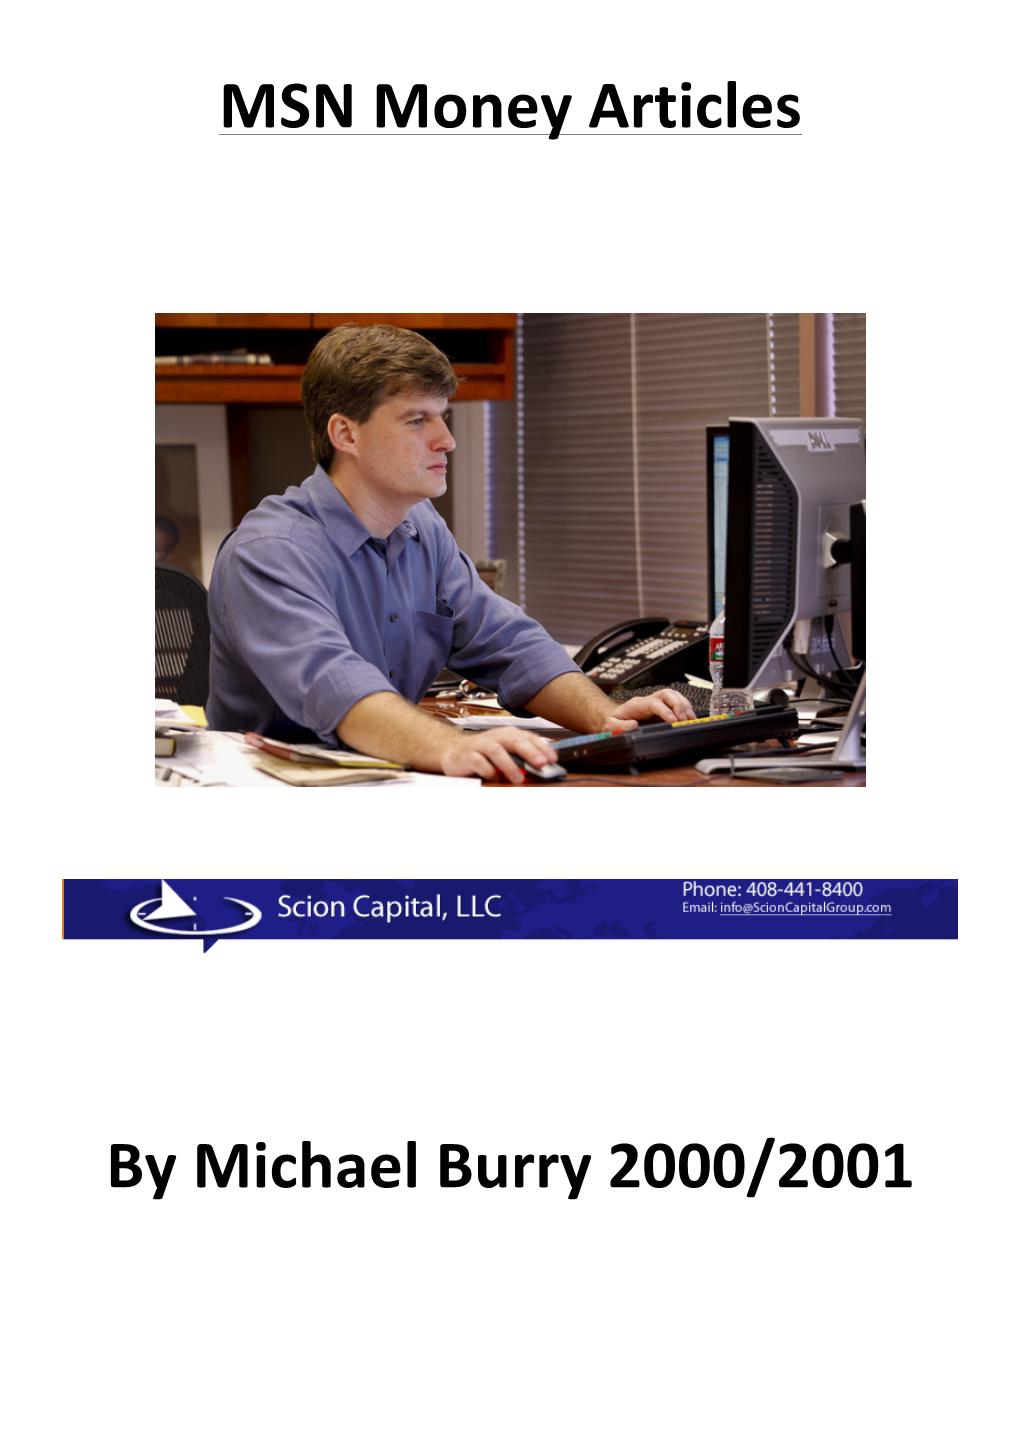 Michael Burry 2000/2001